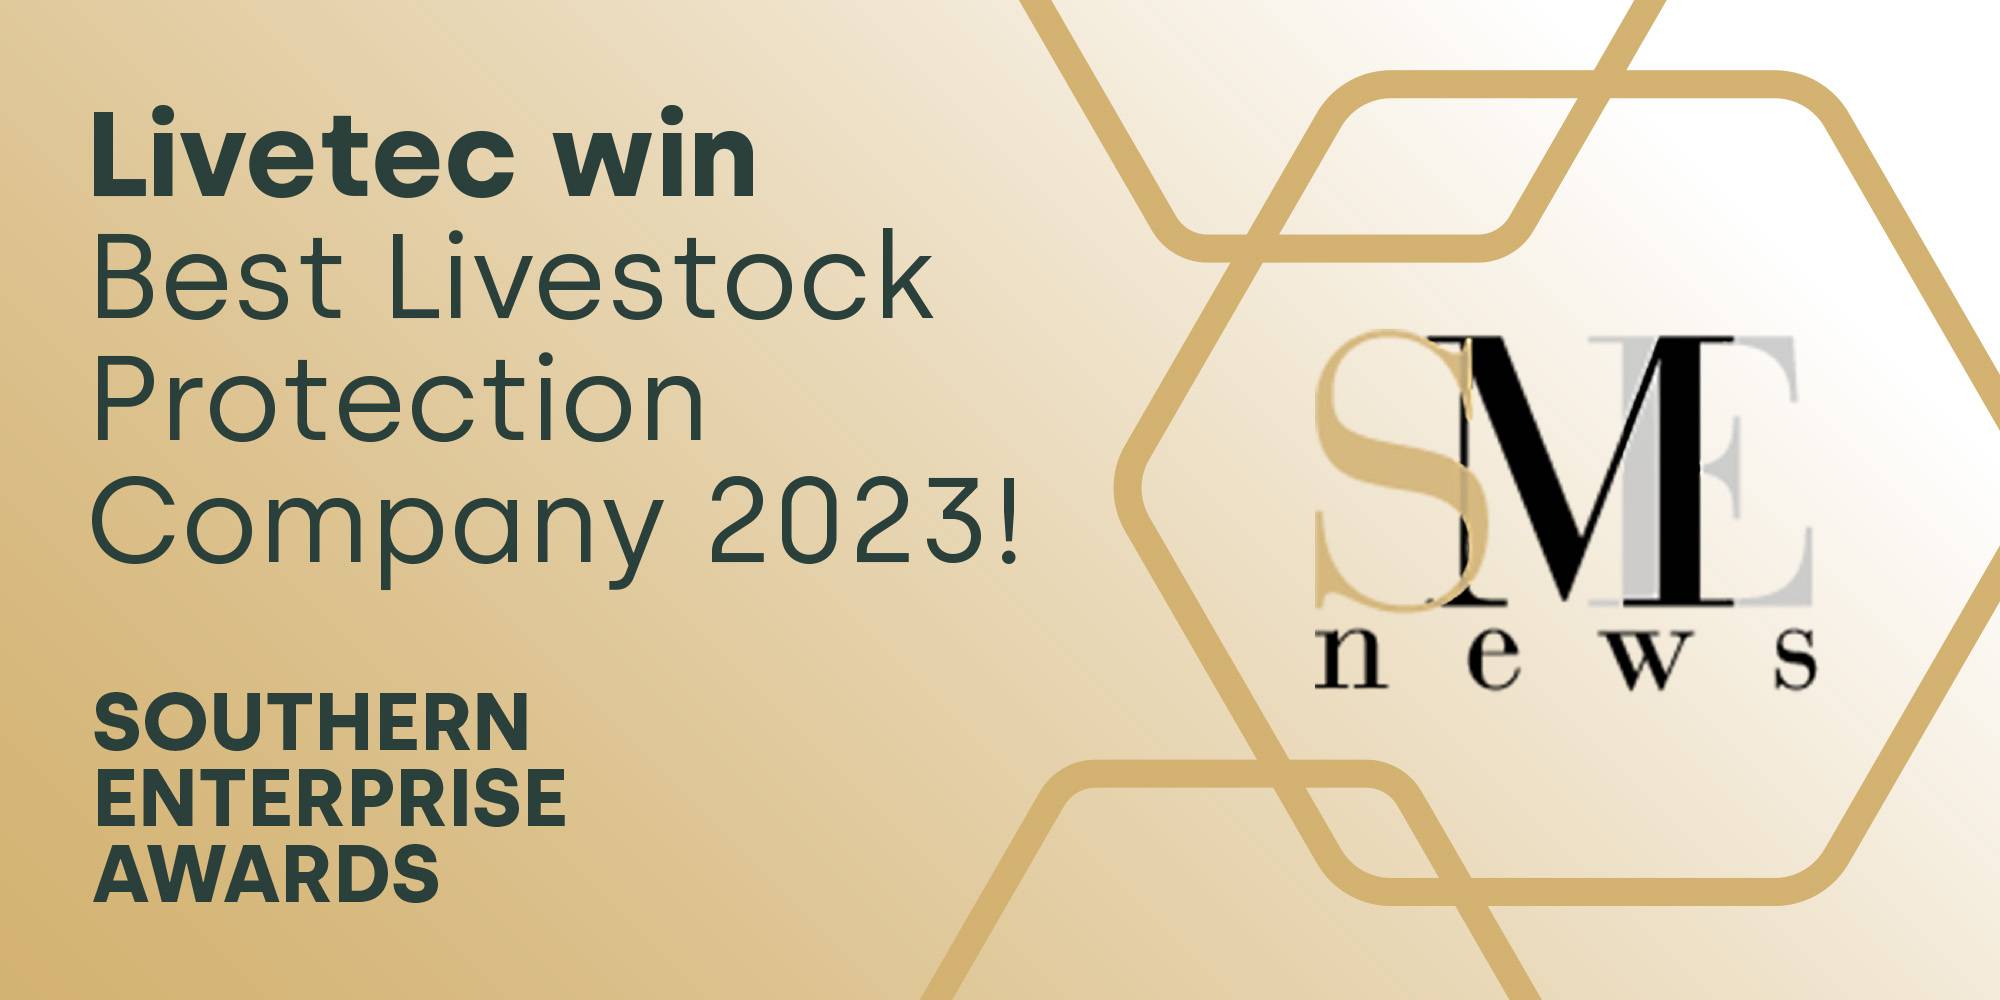 Livetec wins Best Livestock Protection Company 2023 blog graphic